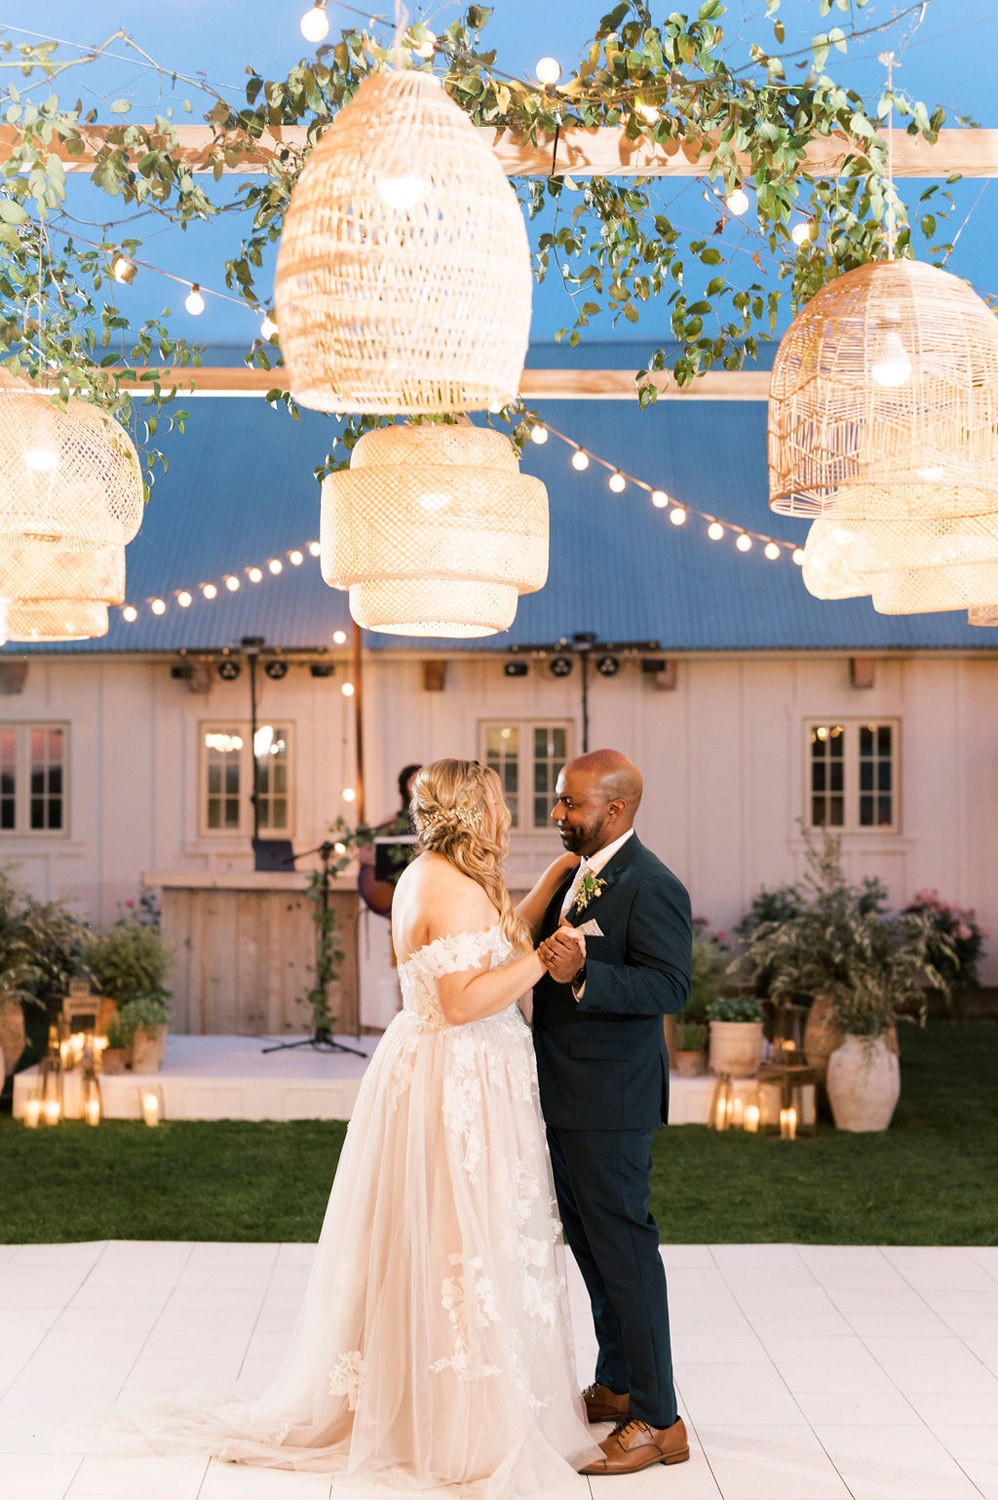 wedding dance floor with oversized lanterns